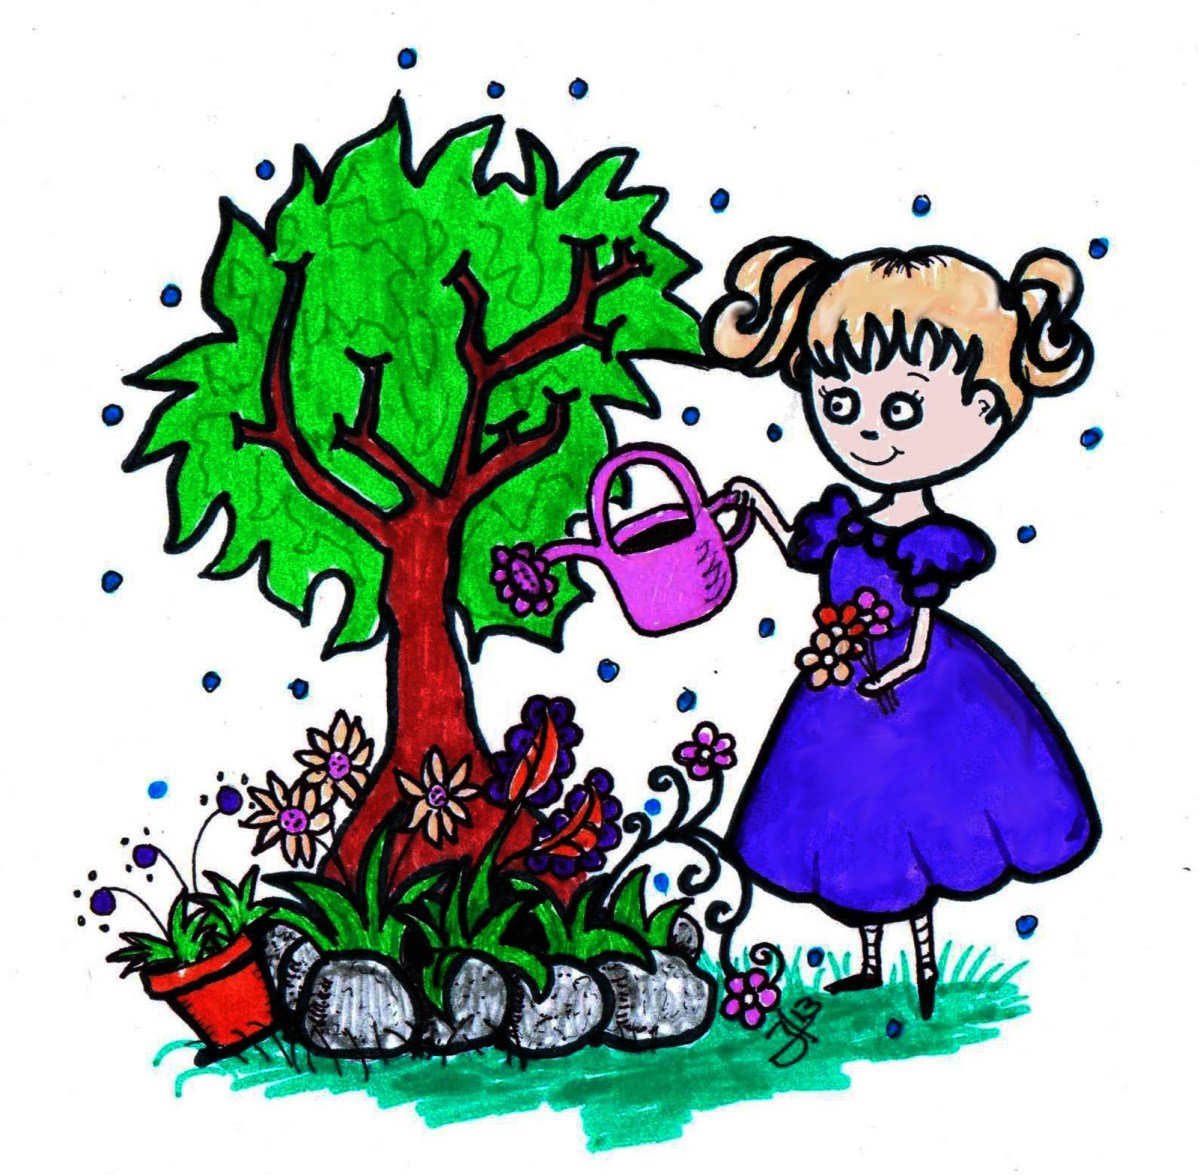 Gardening is magical to children. Original artwork by author.